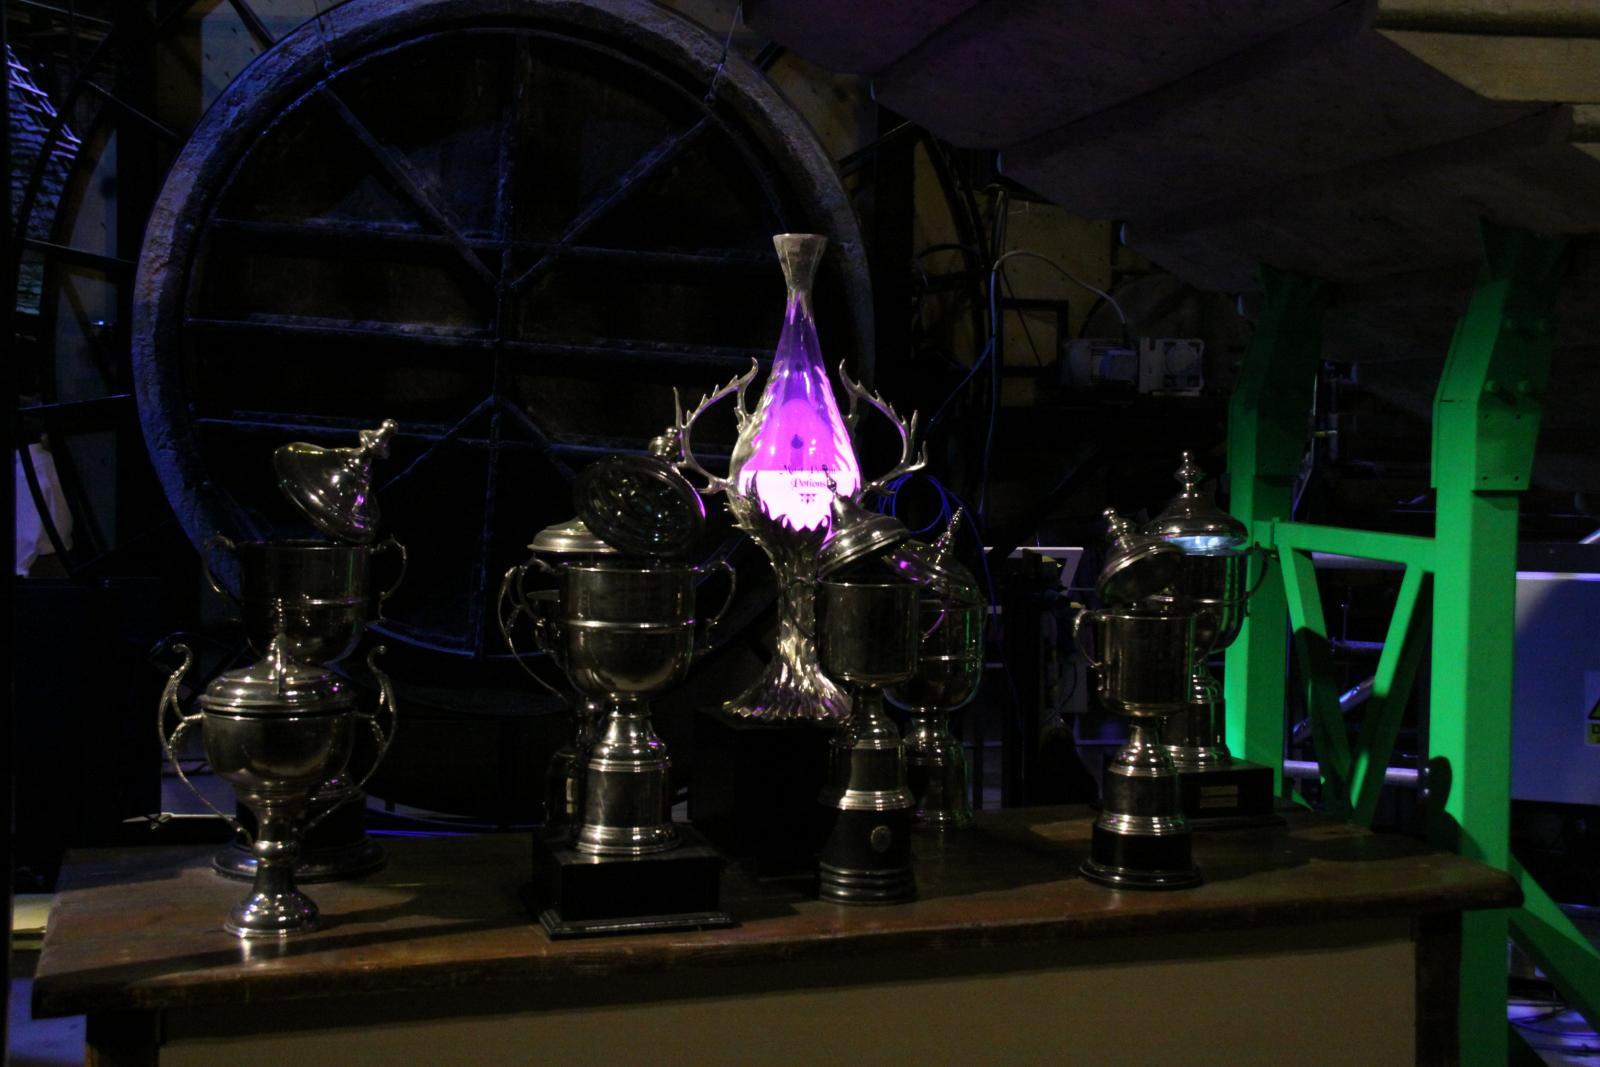 making harry potter10 The Making of Harry Potter, Warner Bros Studio London